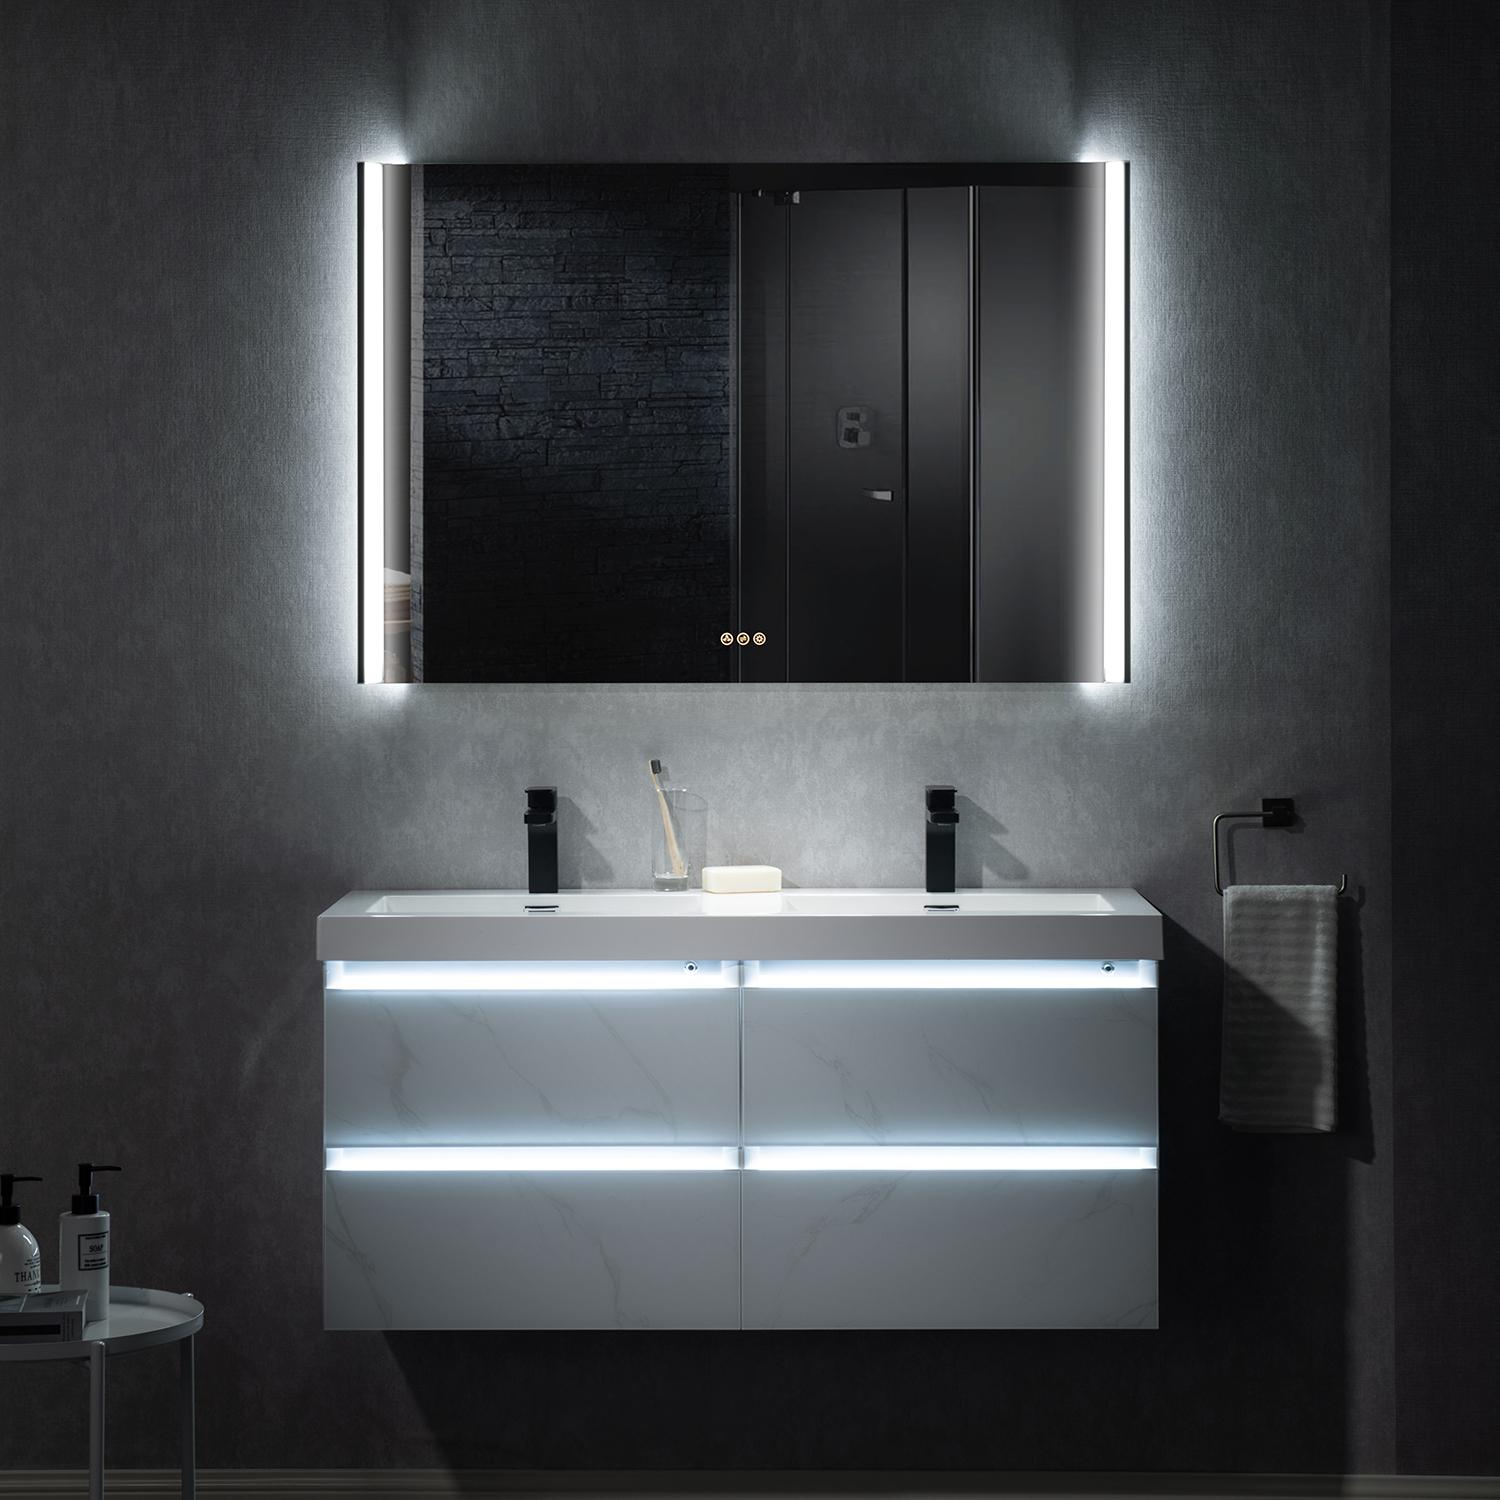 Jena Bathroom Vanity with LED illumination between shelves - Vanity Plus